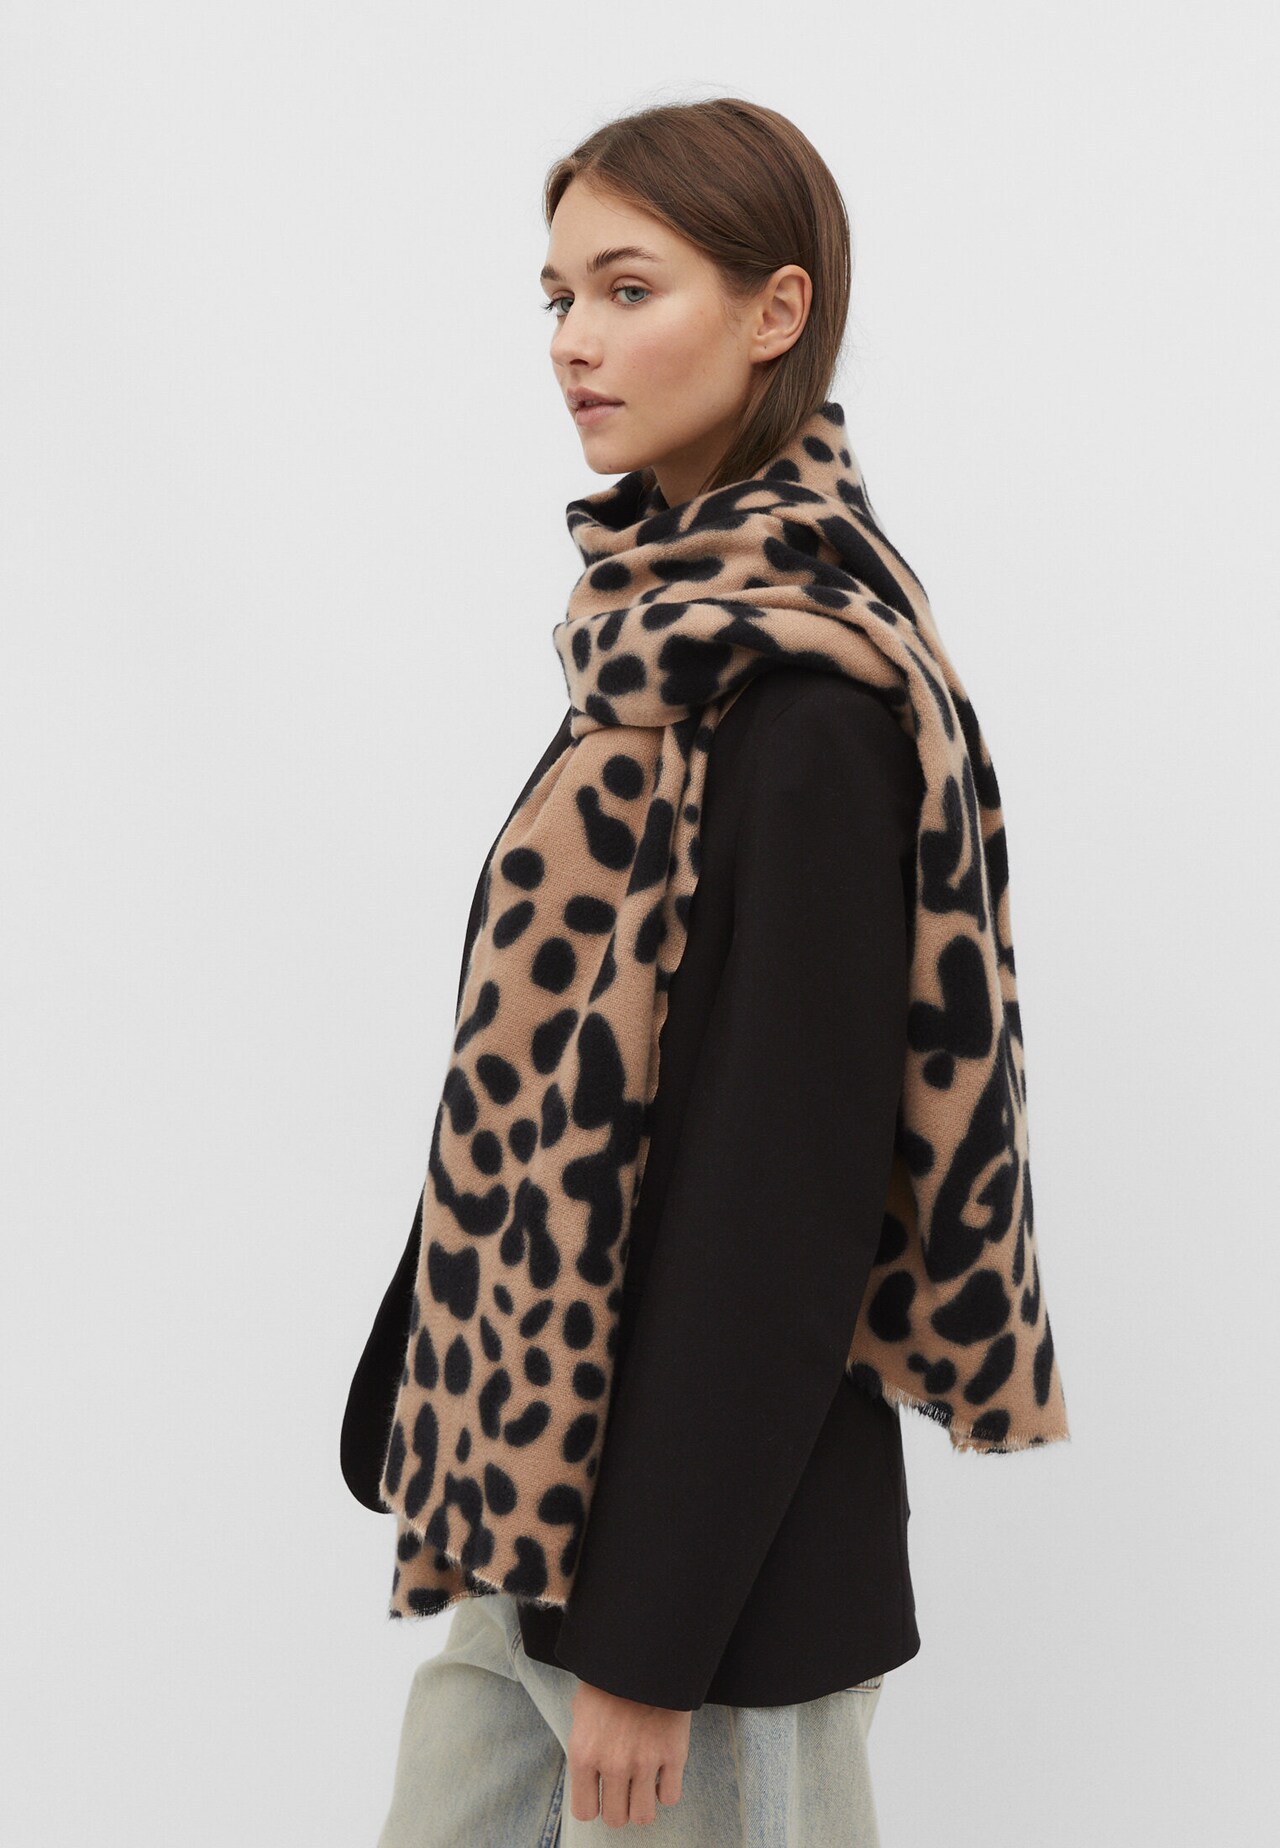 Leopard print scarf